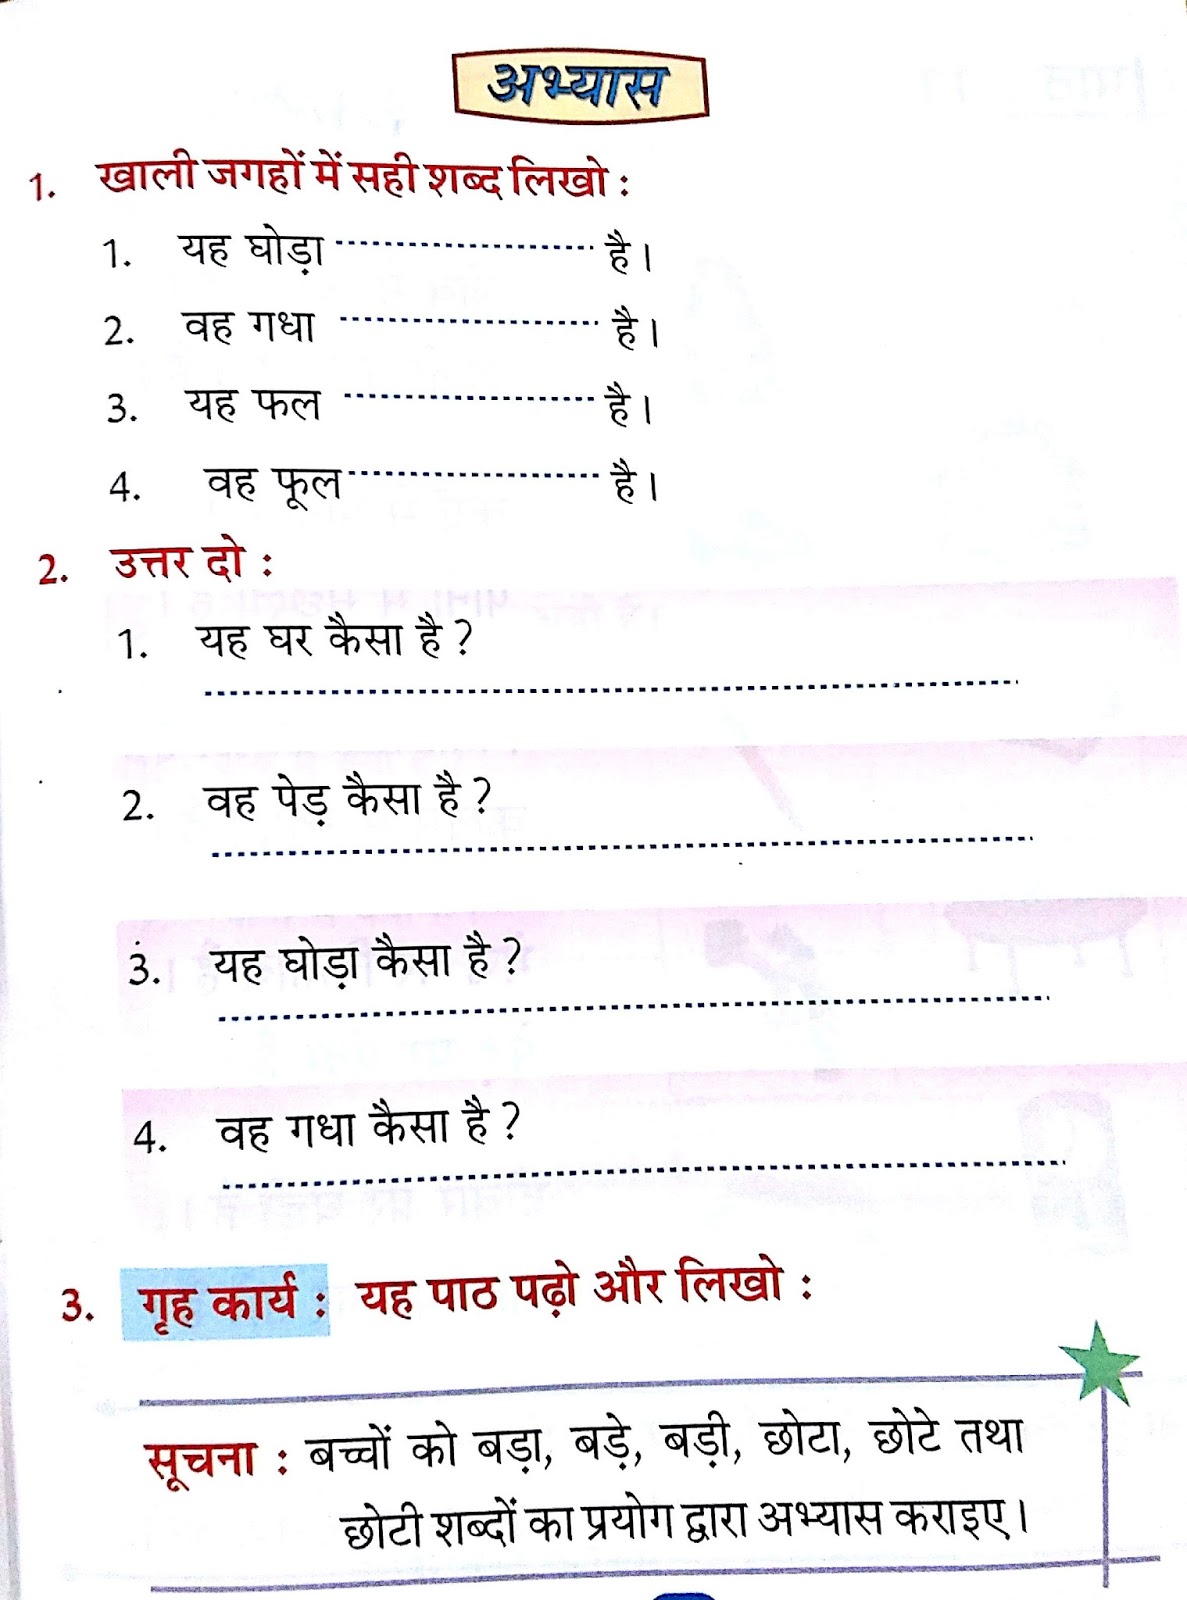 Hindi Grammar Work Sheet Collection For Classes 5 6 7 8 Adjectives Work Sheets For Classes 3